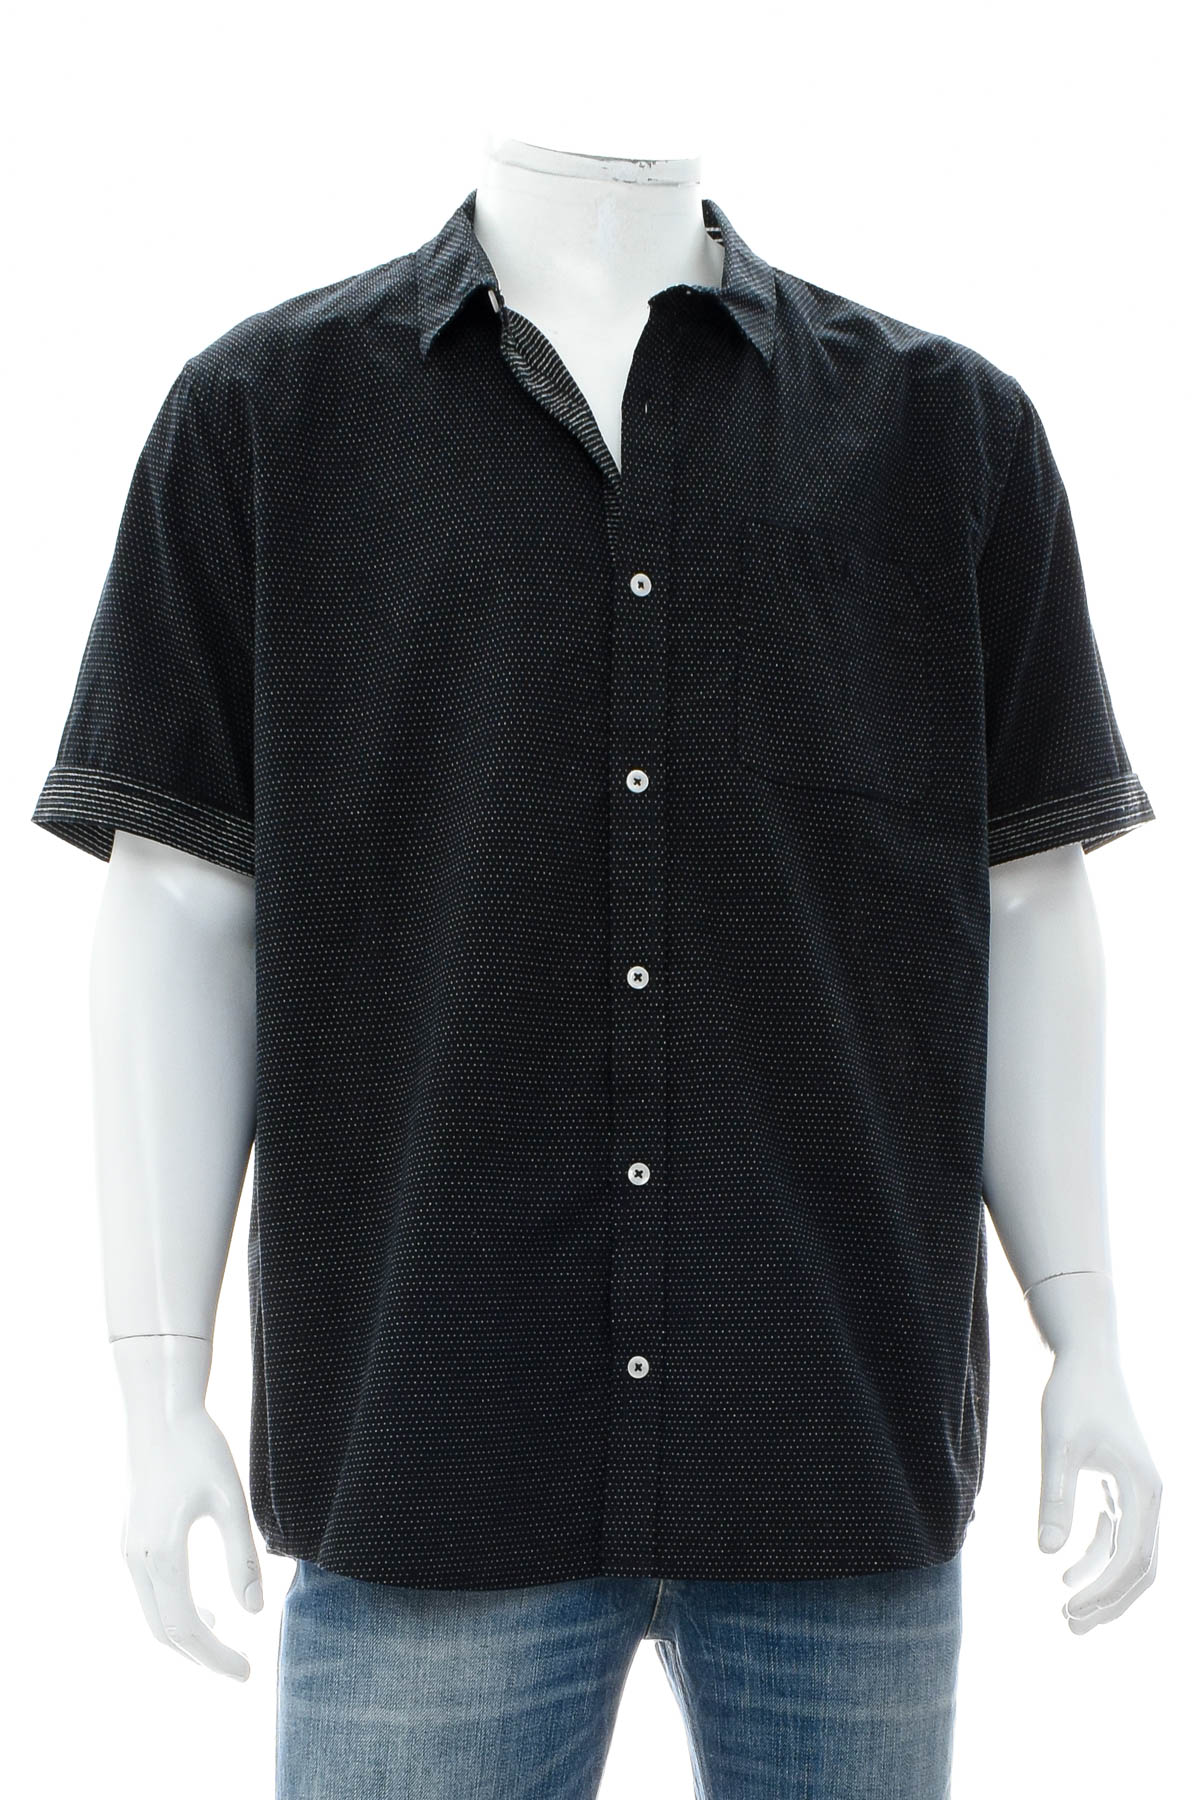 Men's shirt - Jean Pascale - 0